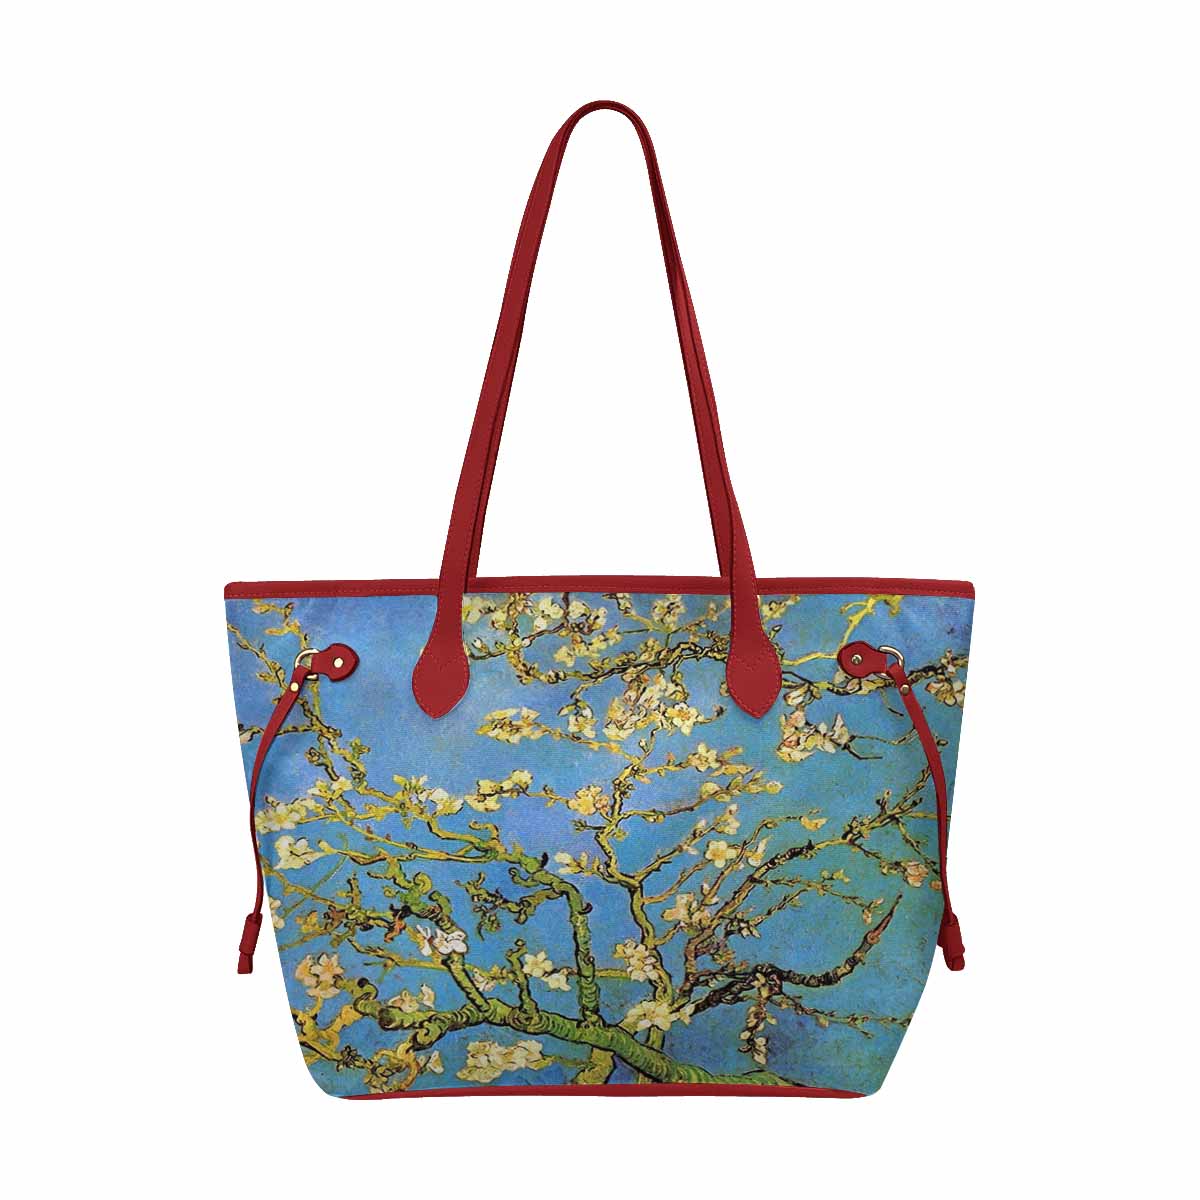 Vintage Floral Handbag, Classic Handbag, Mod 1695361 Design 20, RED TRIM